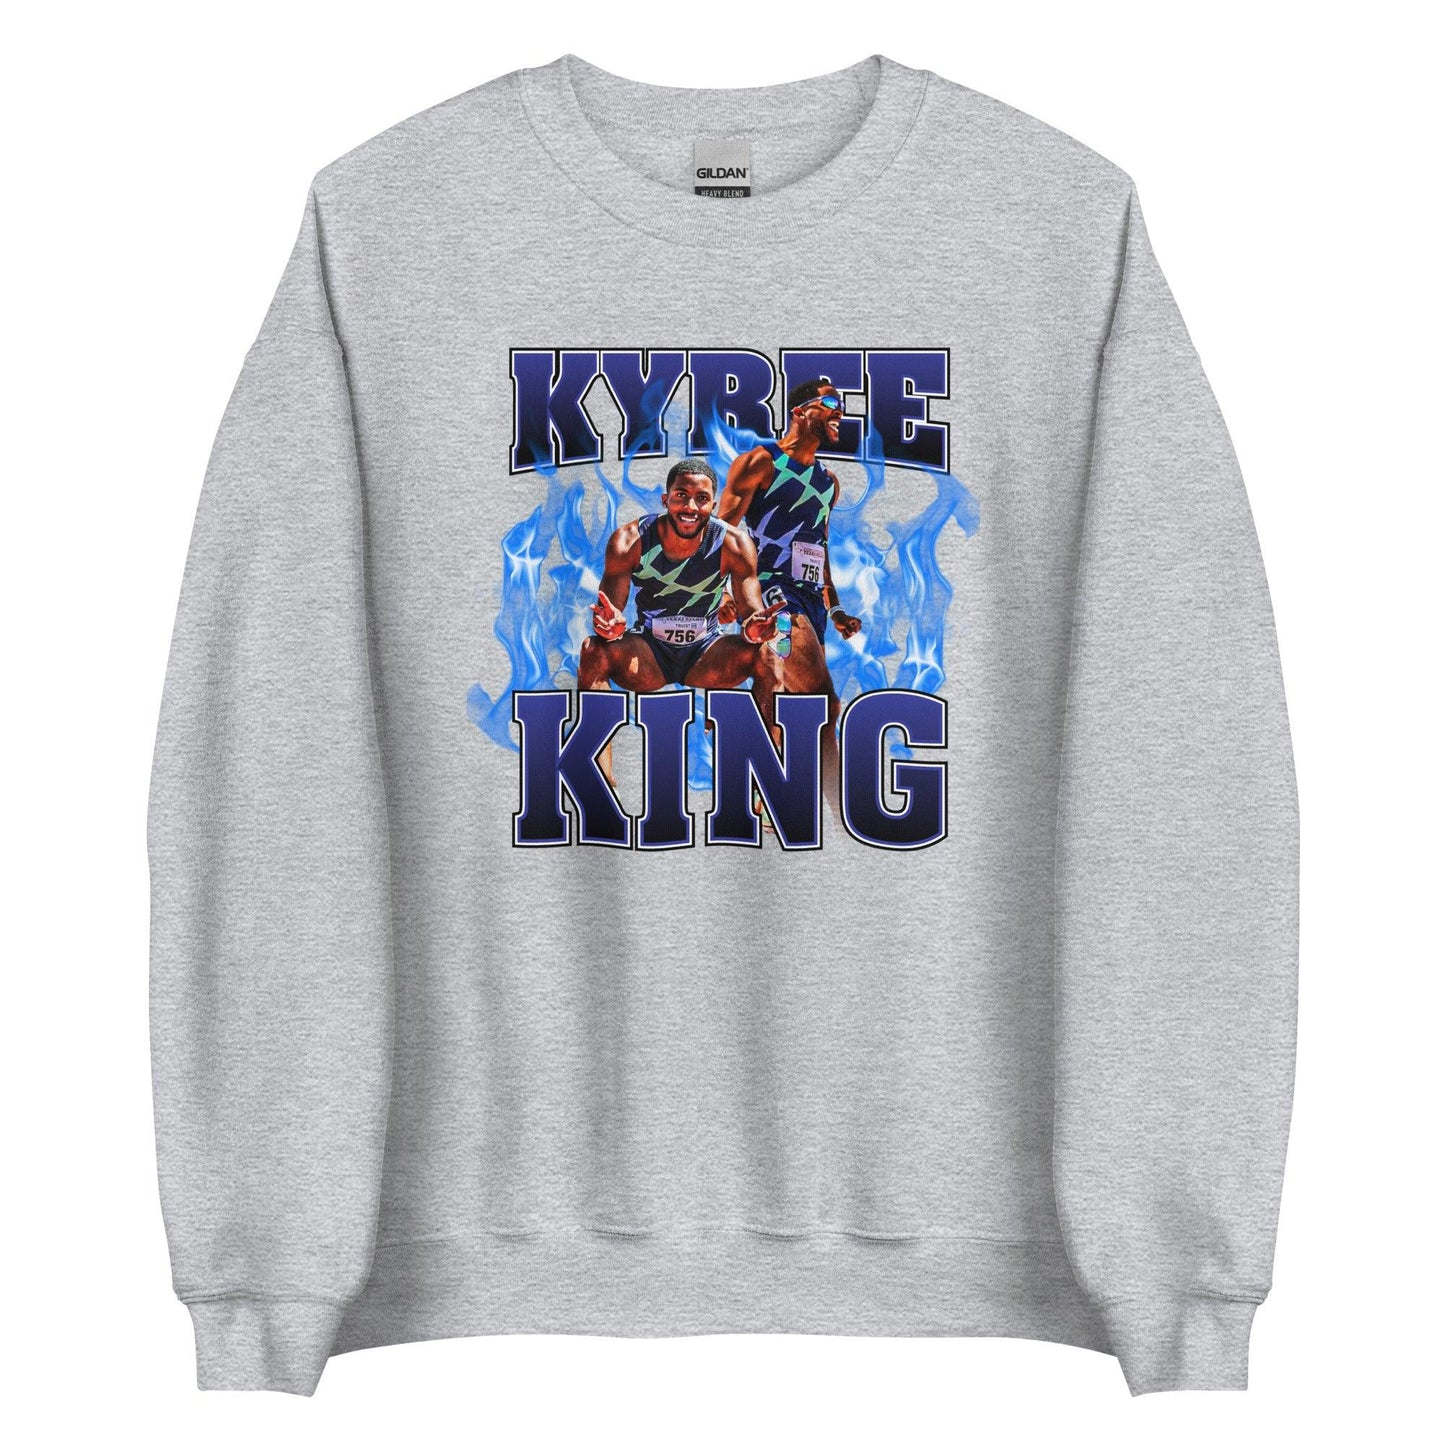 Kyree King “Essential” Sweatshirt - Fan Arch